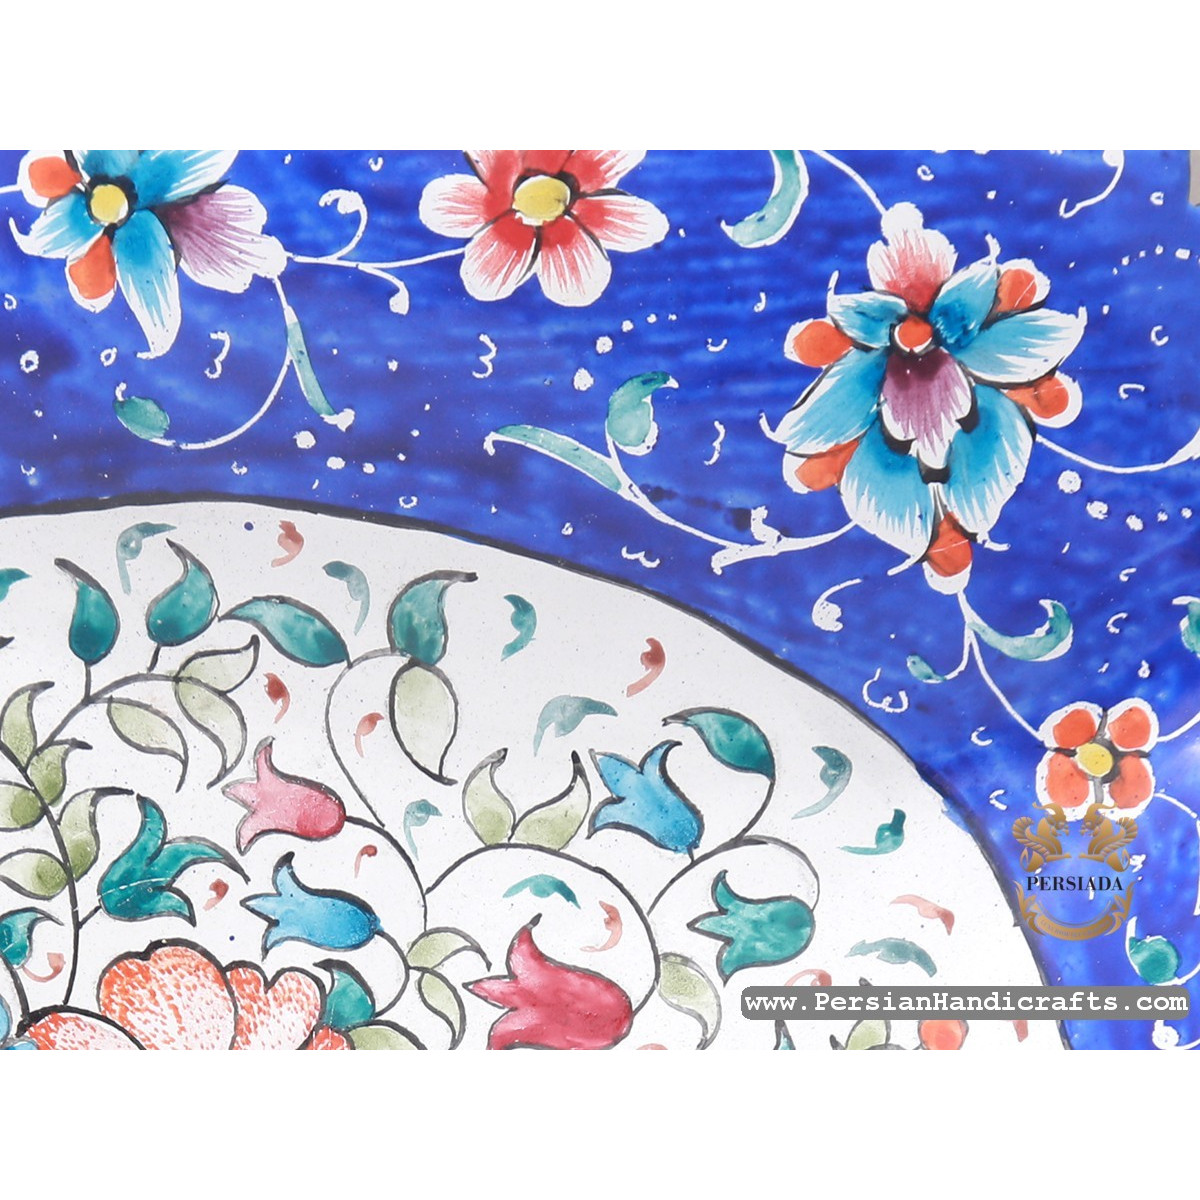 Wall Plate | Hand Painted Enamel Minakari | HE7112-Persian Handicrafts